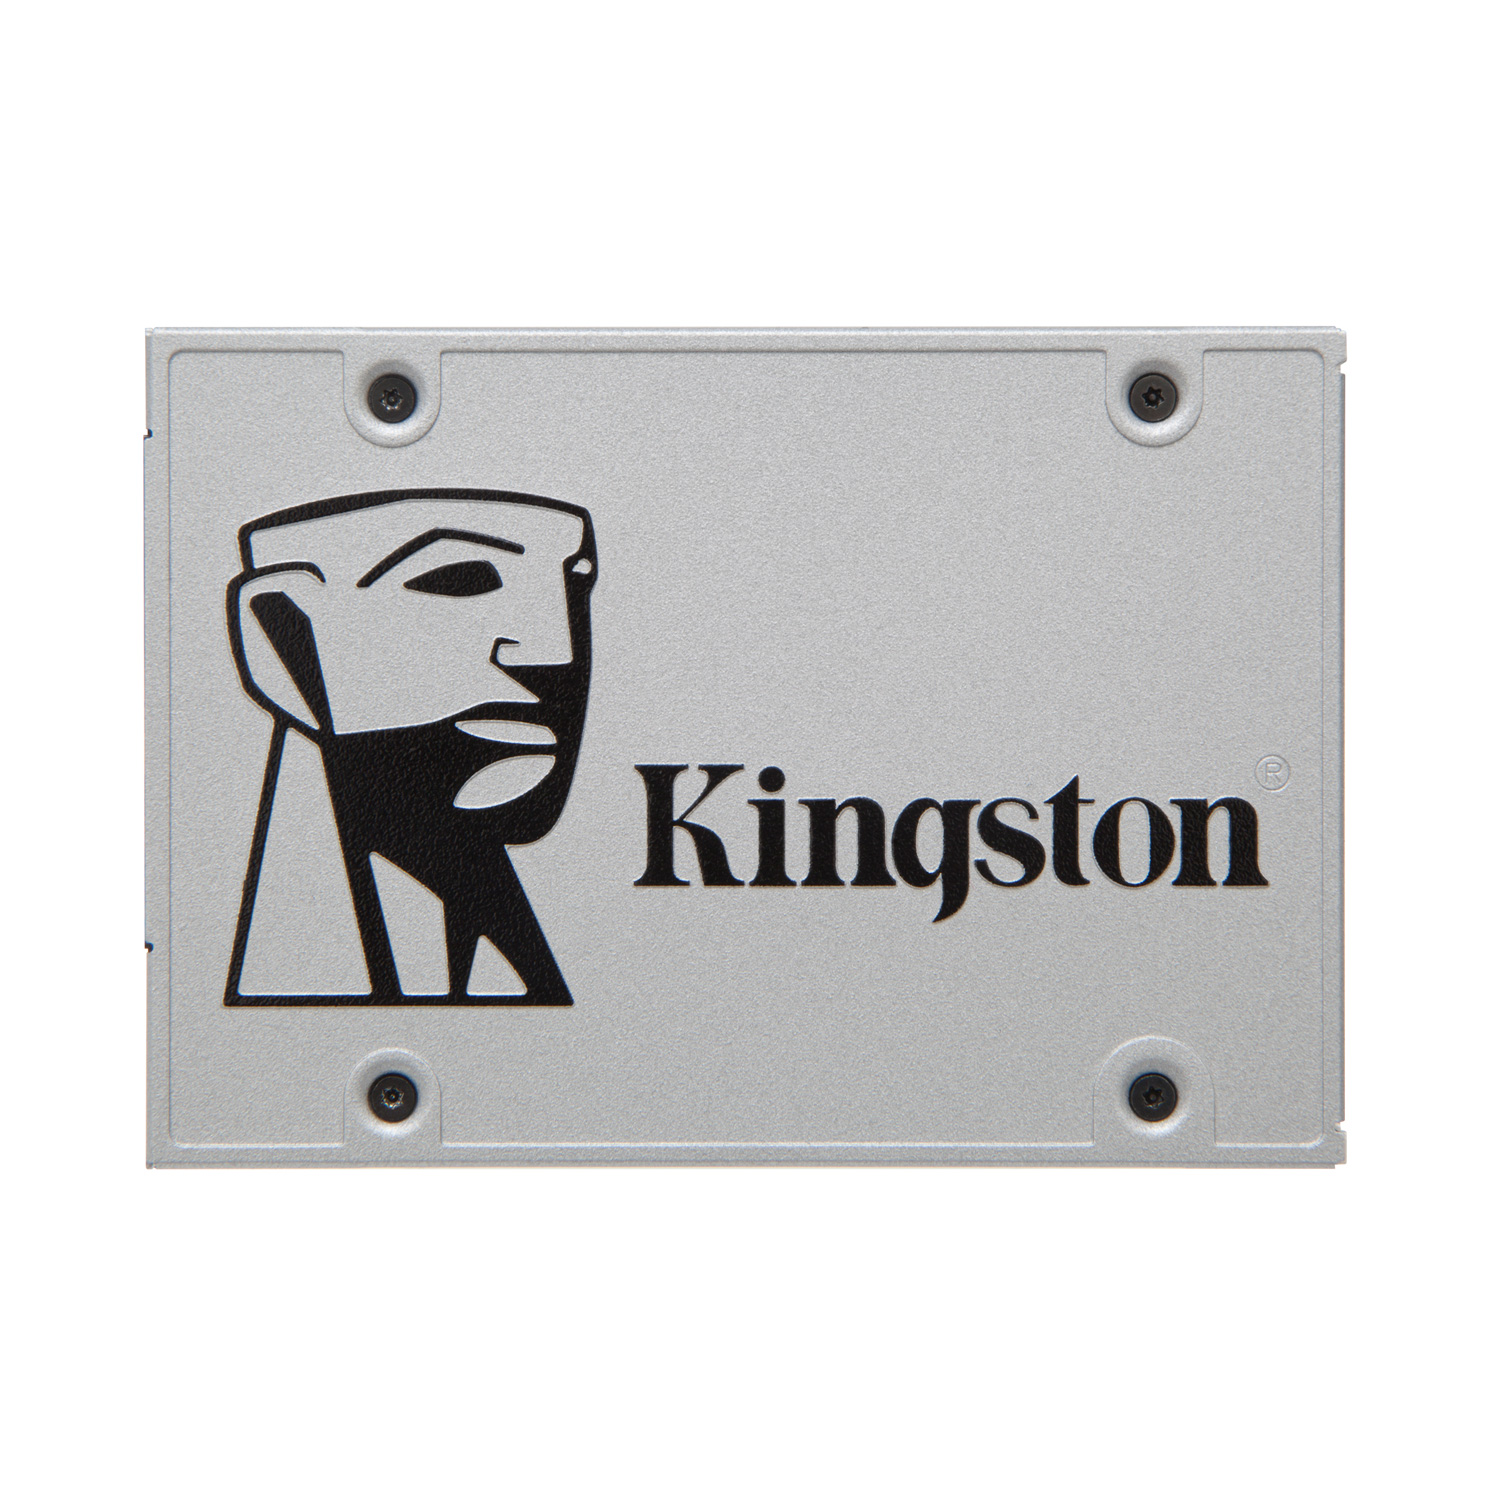 Disque dur SSD Kingston A400 240 Go 2.5 pouces 7mm Serial ATA 6Gb/s, Futur Runion informatique